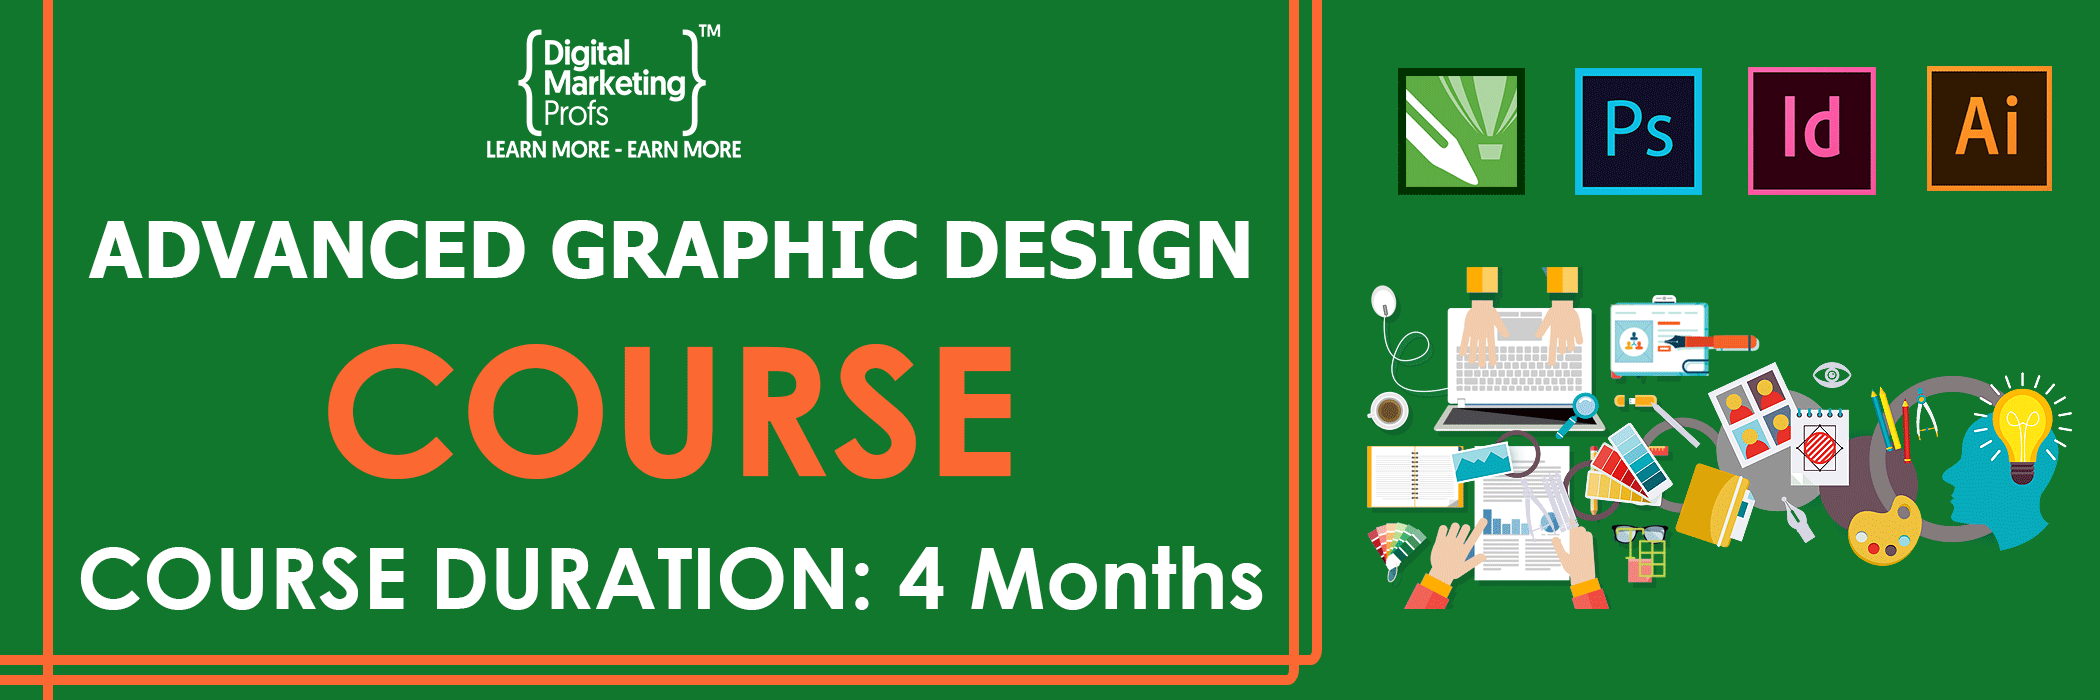 Graphic Design Course Syllabus  Digital Marketing Course in Delhi